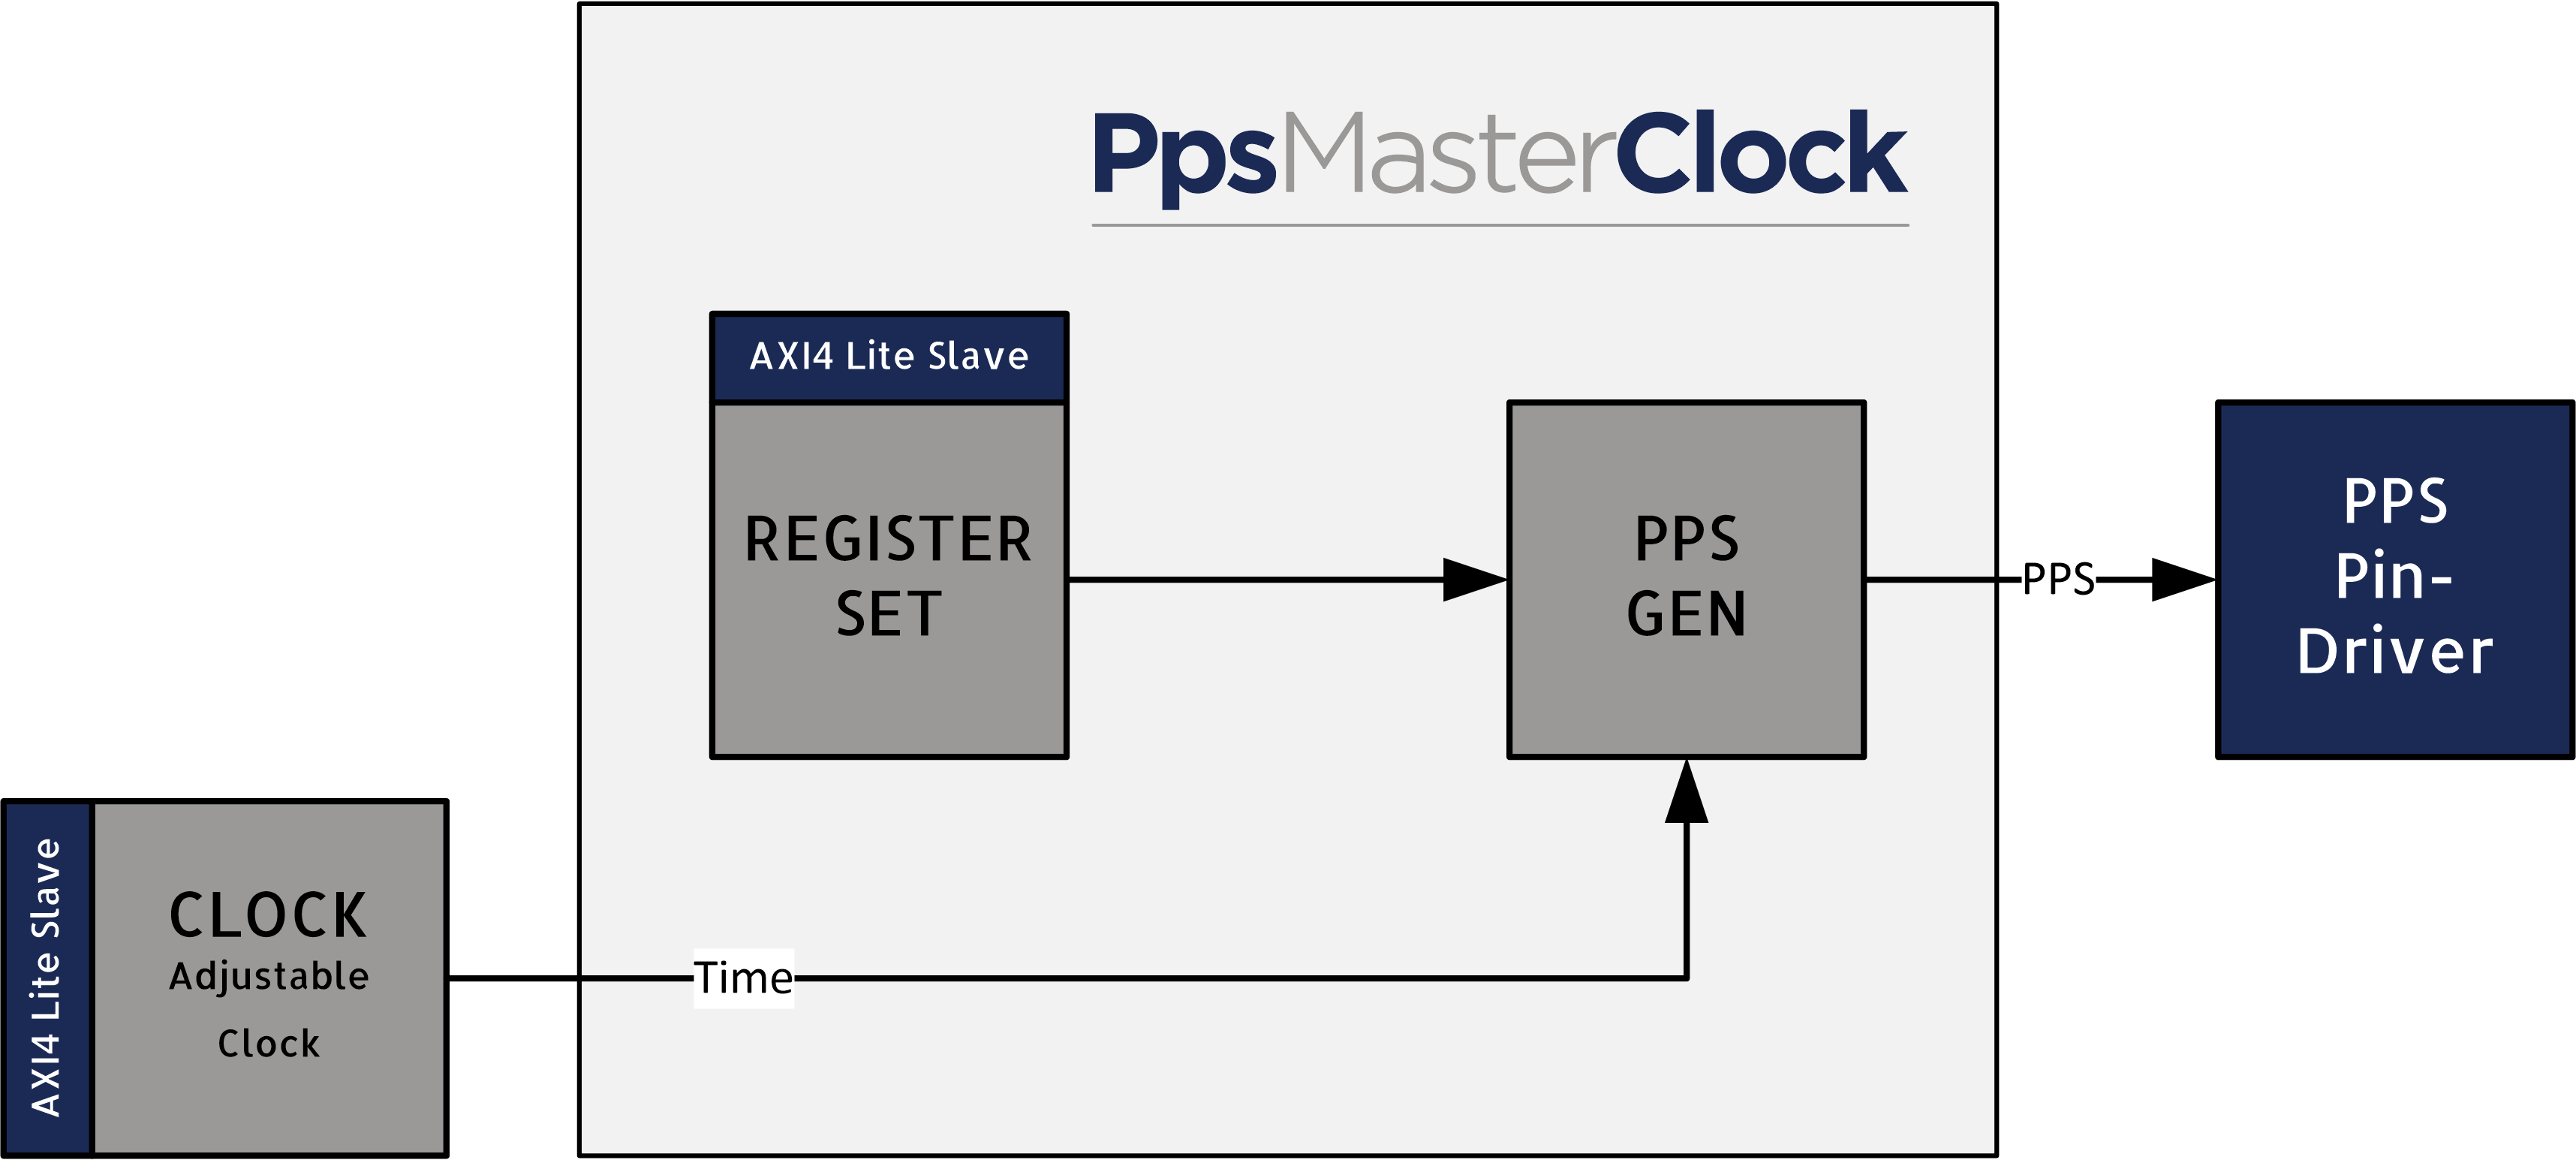 Pps Master Clock